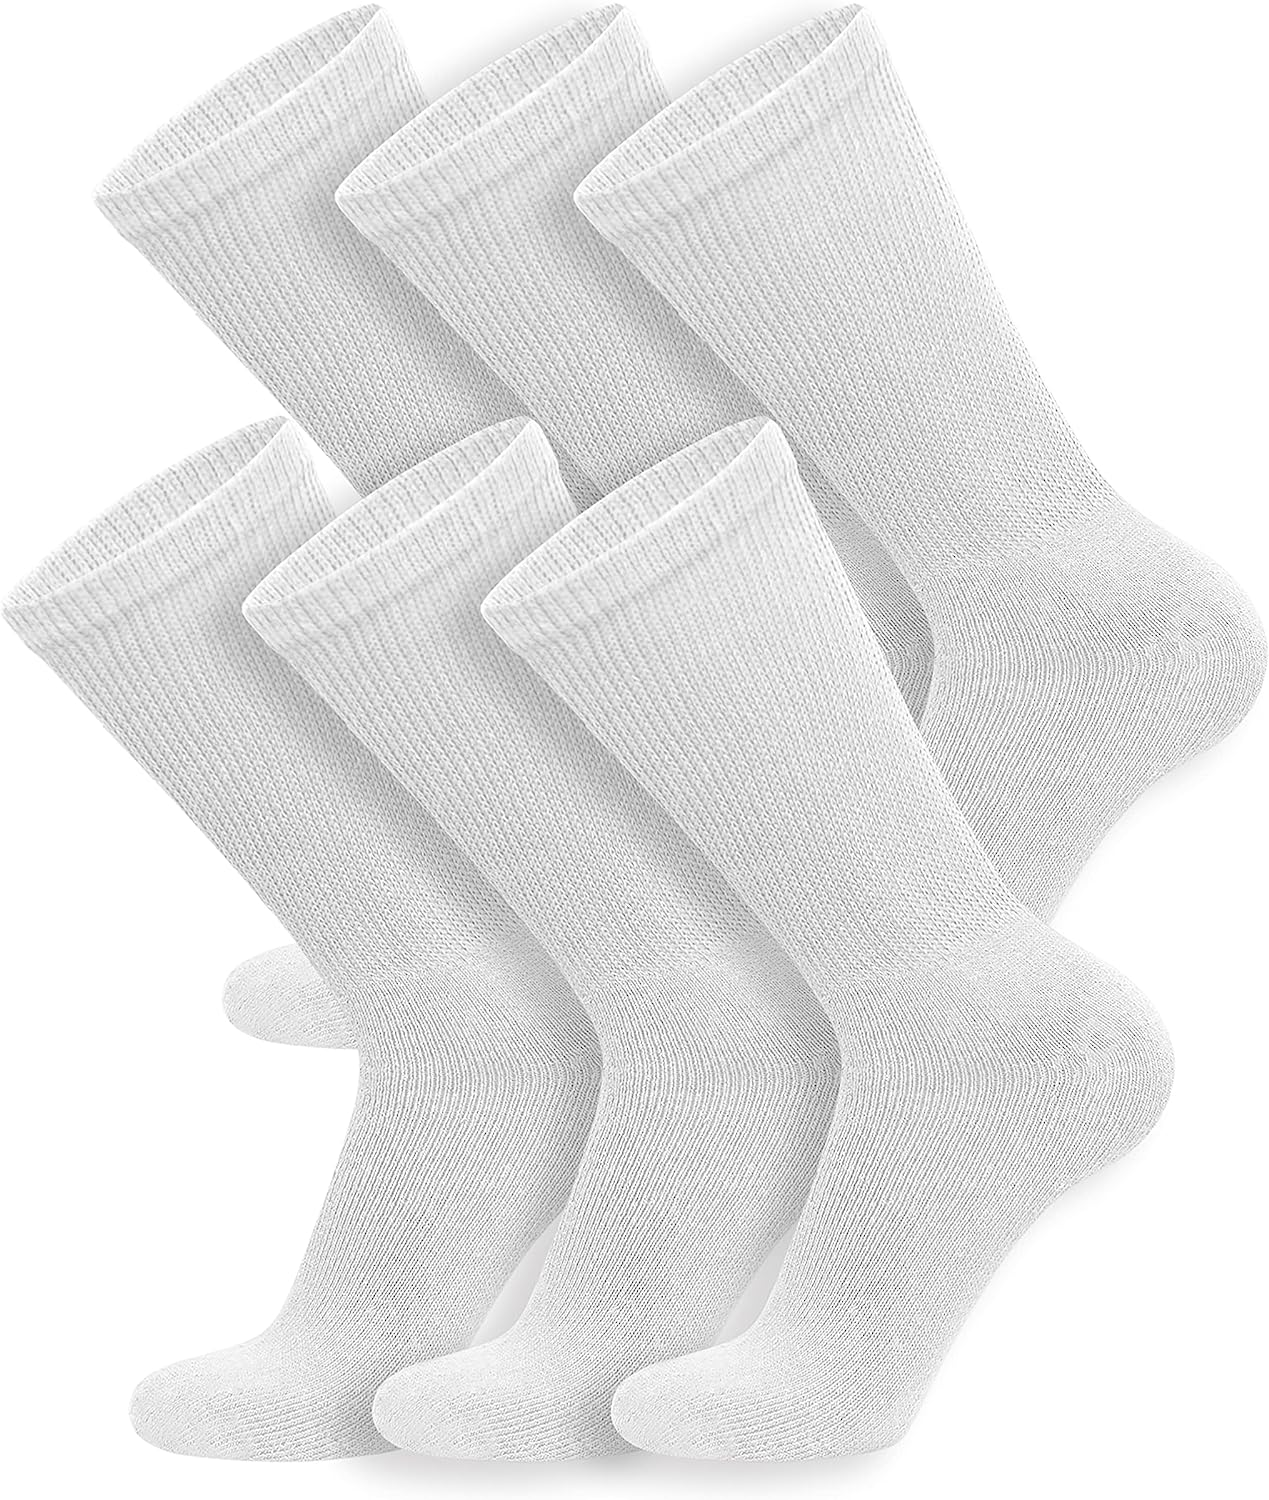 6 Pairs of Cotton Diabetic Neuropathy Crew Socks [...]